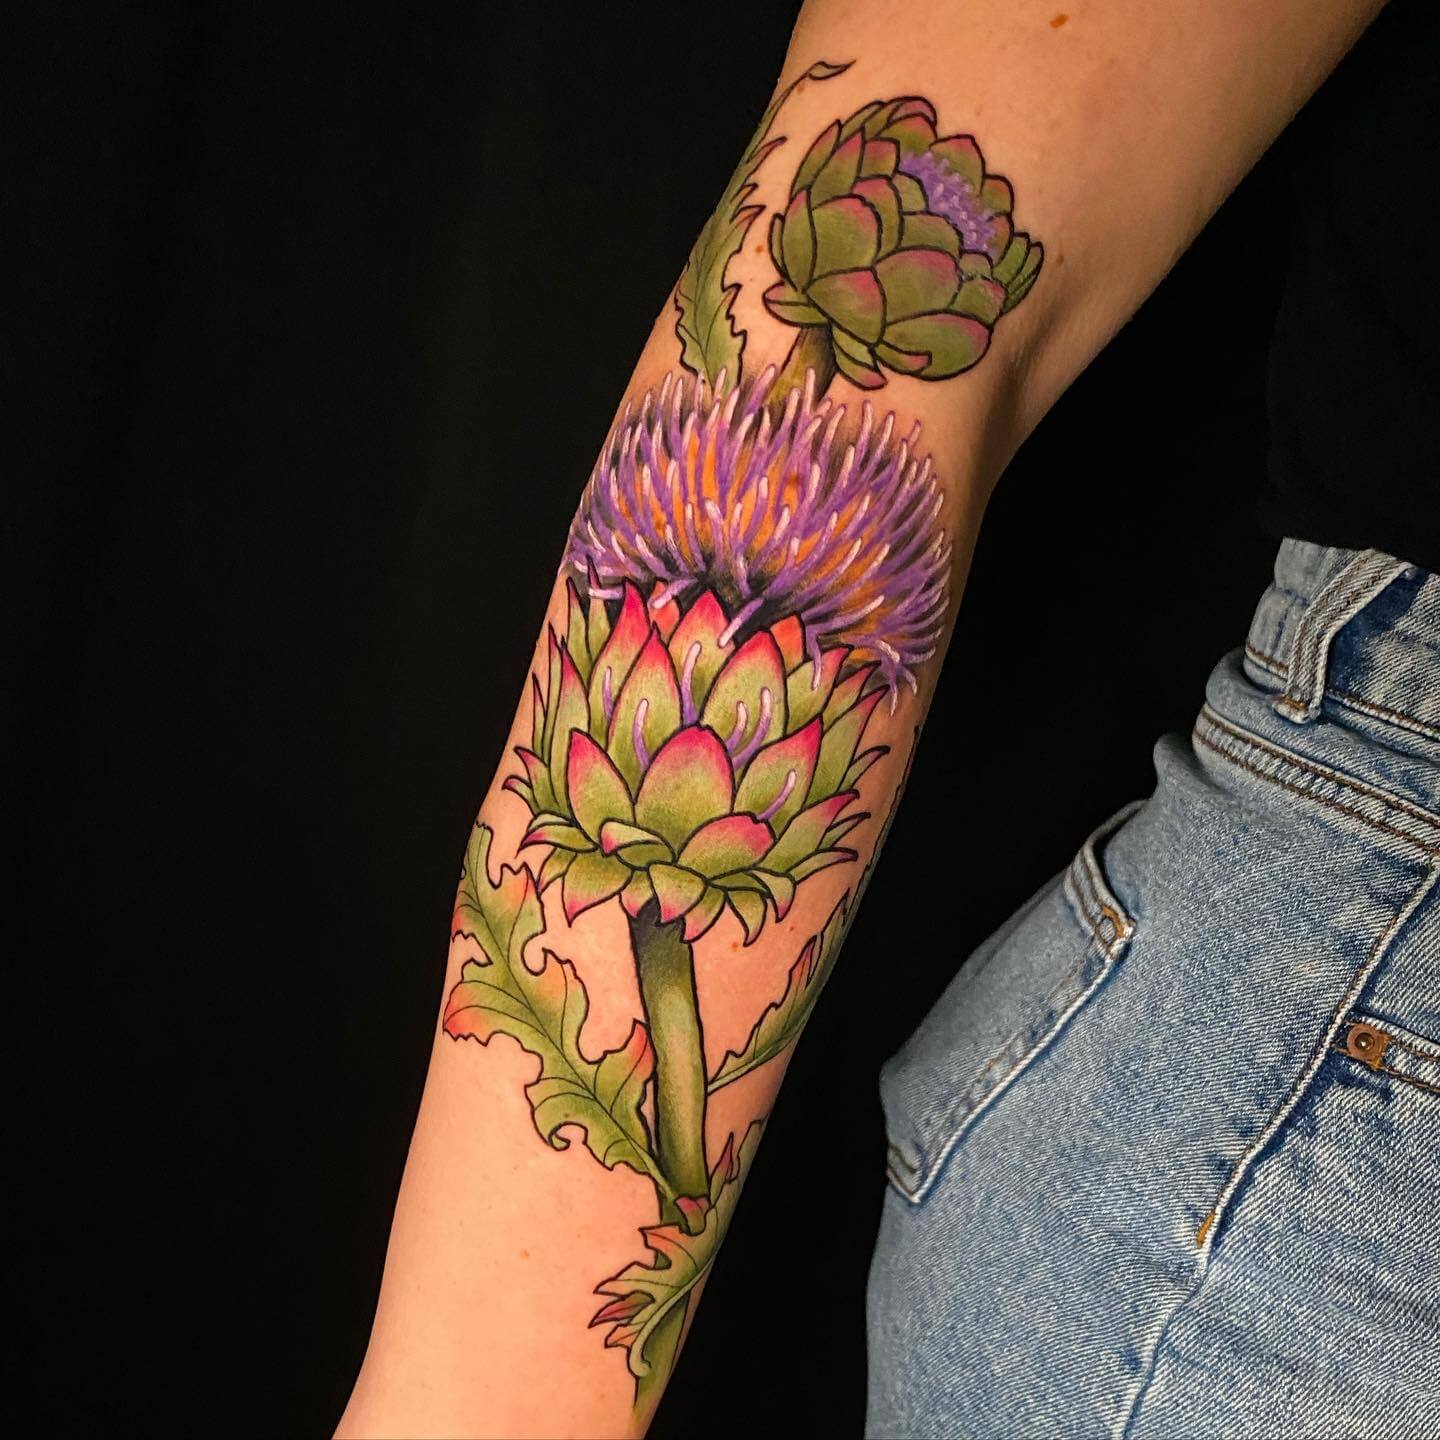 Artichoke Flower Tattoo 9 Artichoke Tattoo: Everything You Need To Know (30+ Cool Design Ideas)